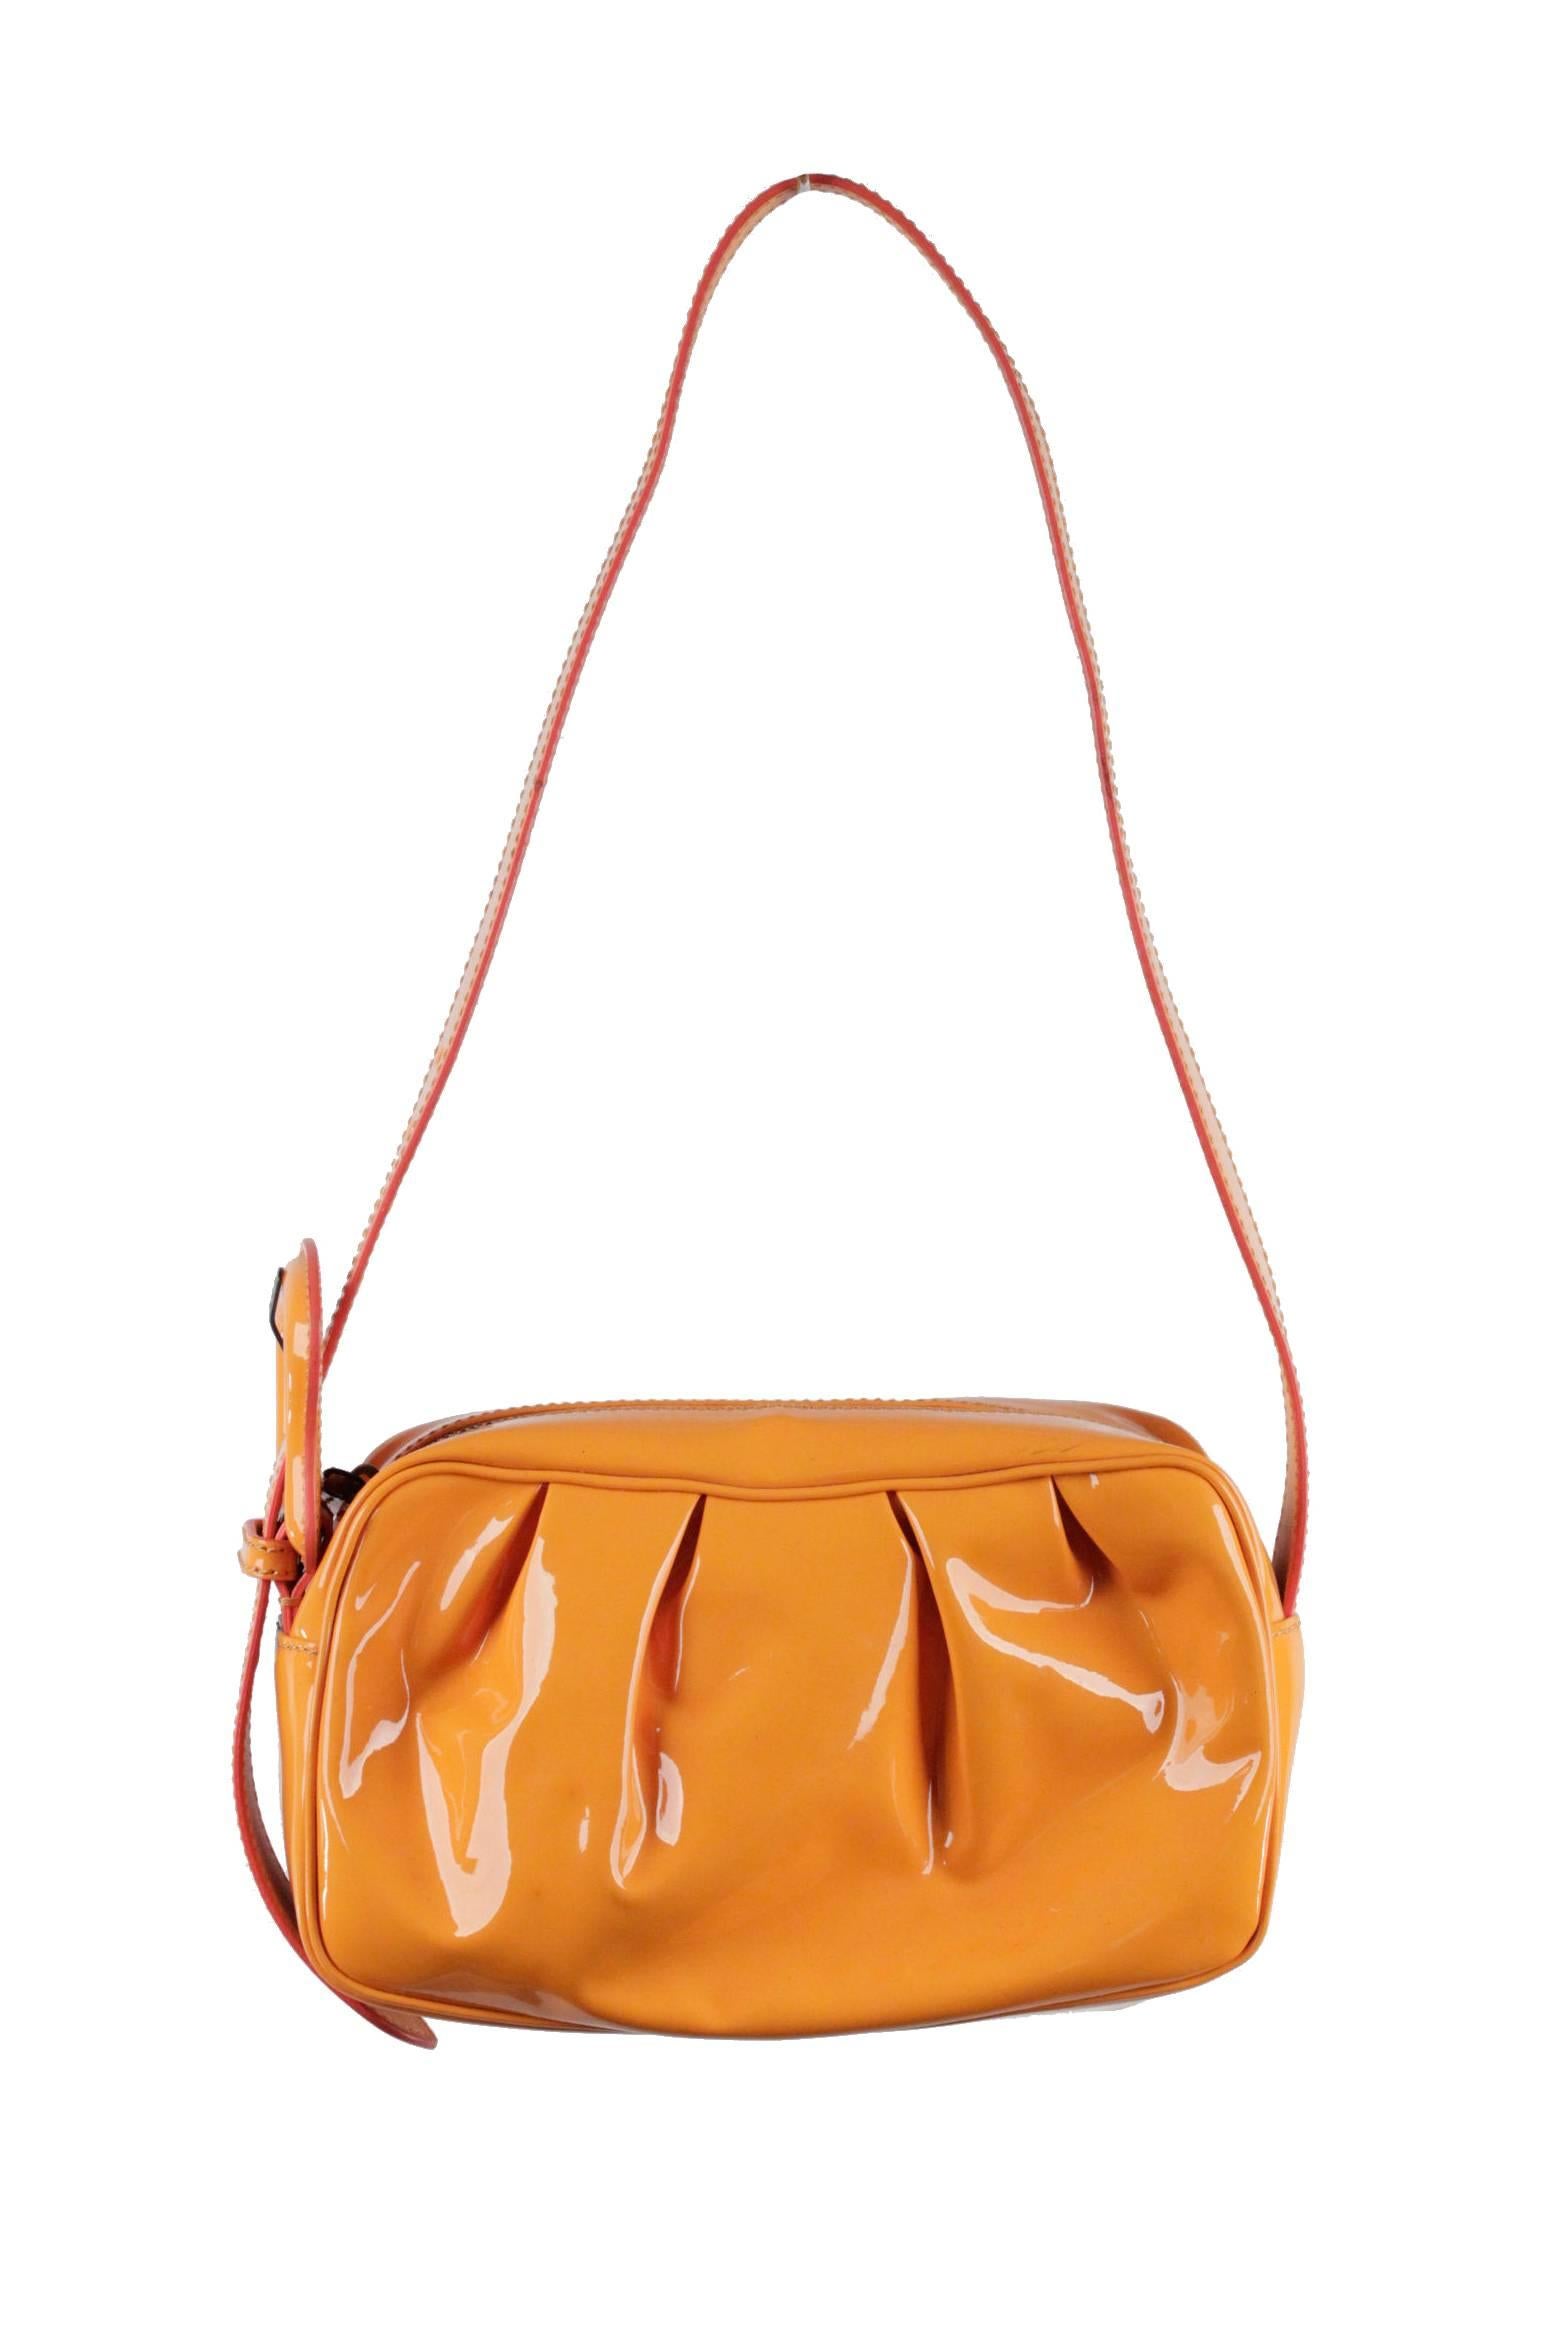 FENDI Orange Patent Leather Small CAMERA B BAG SHOULDER BAG Handbag